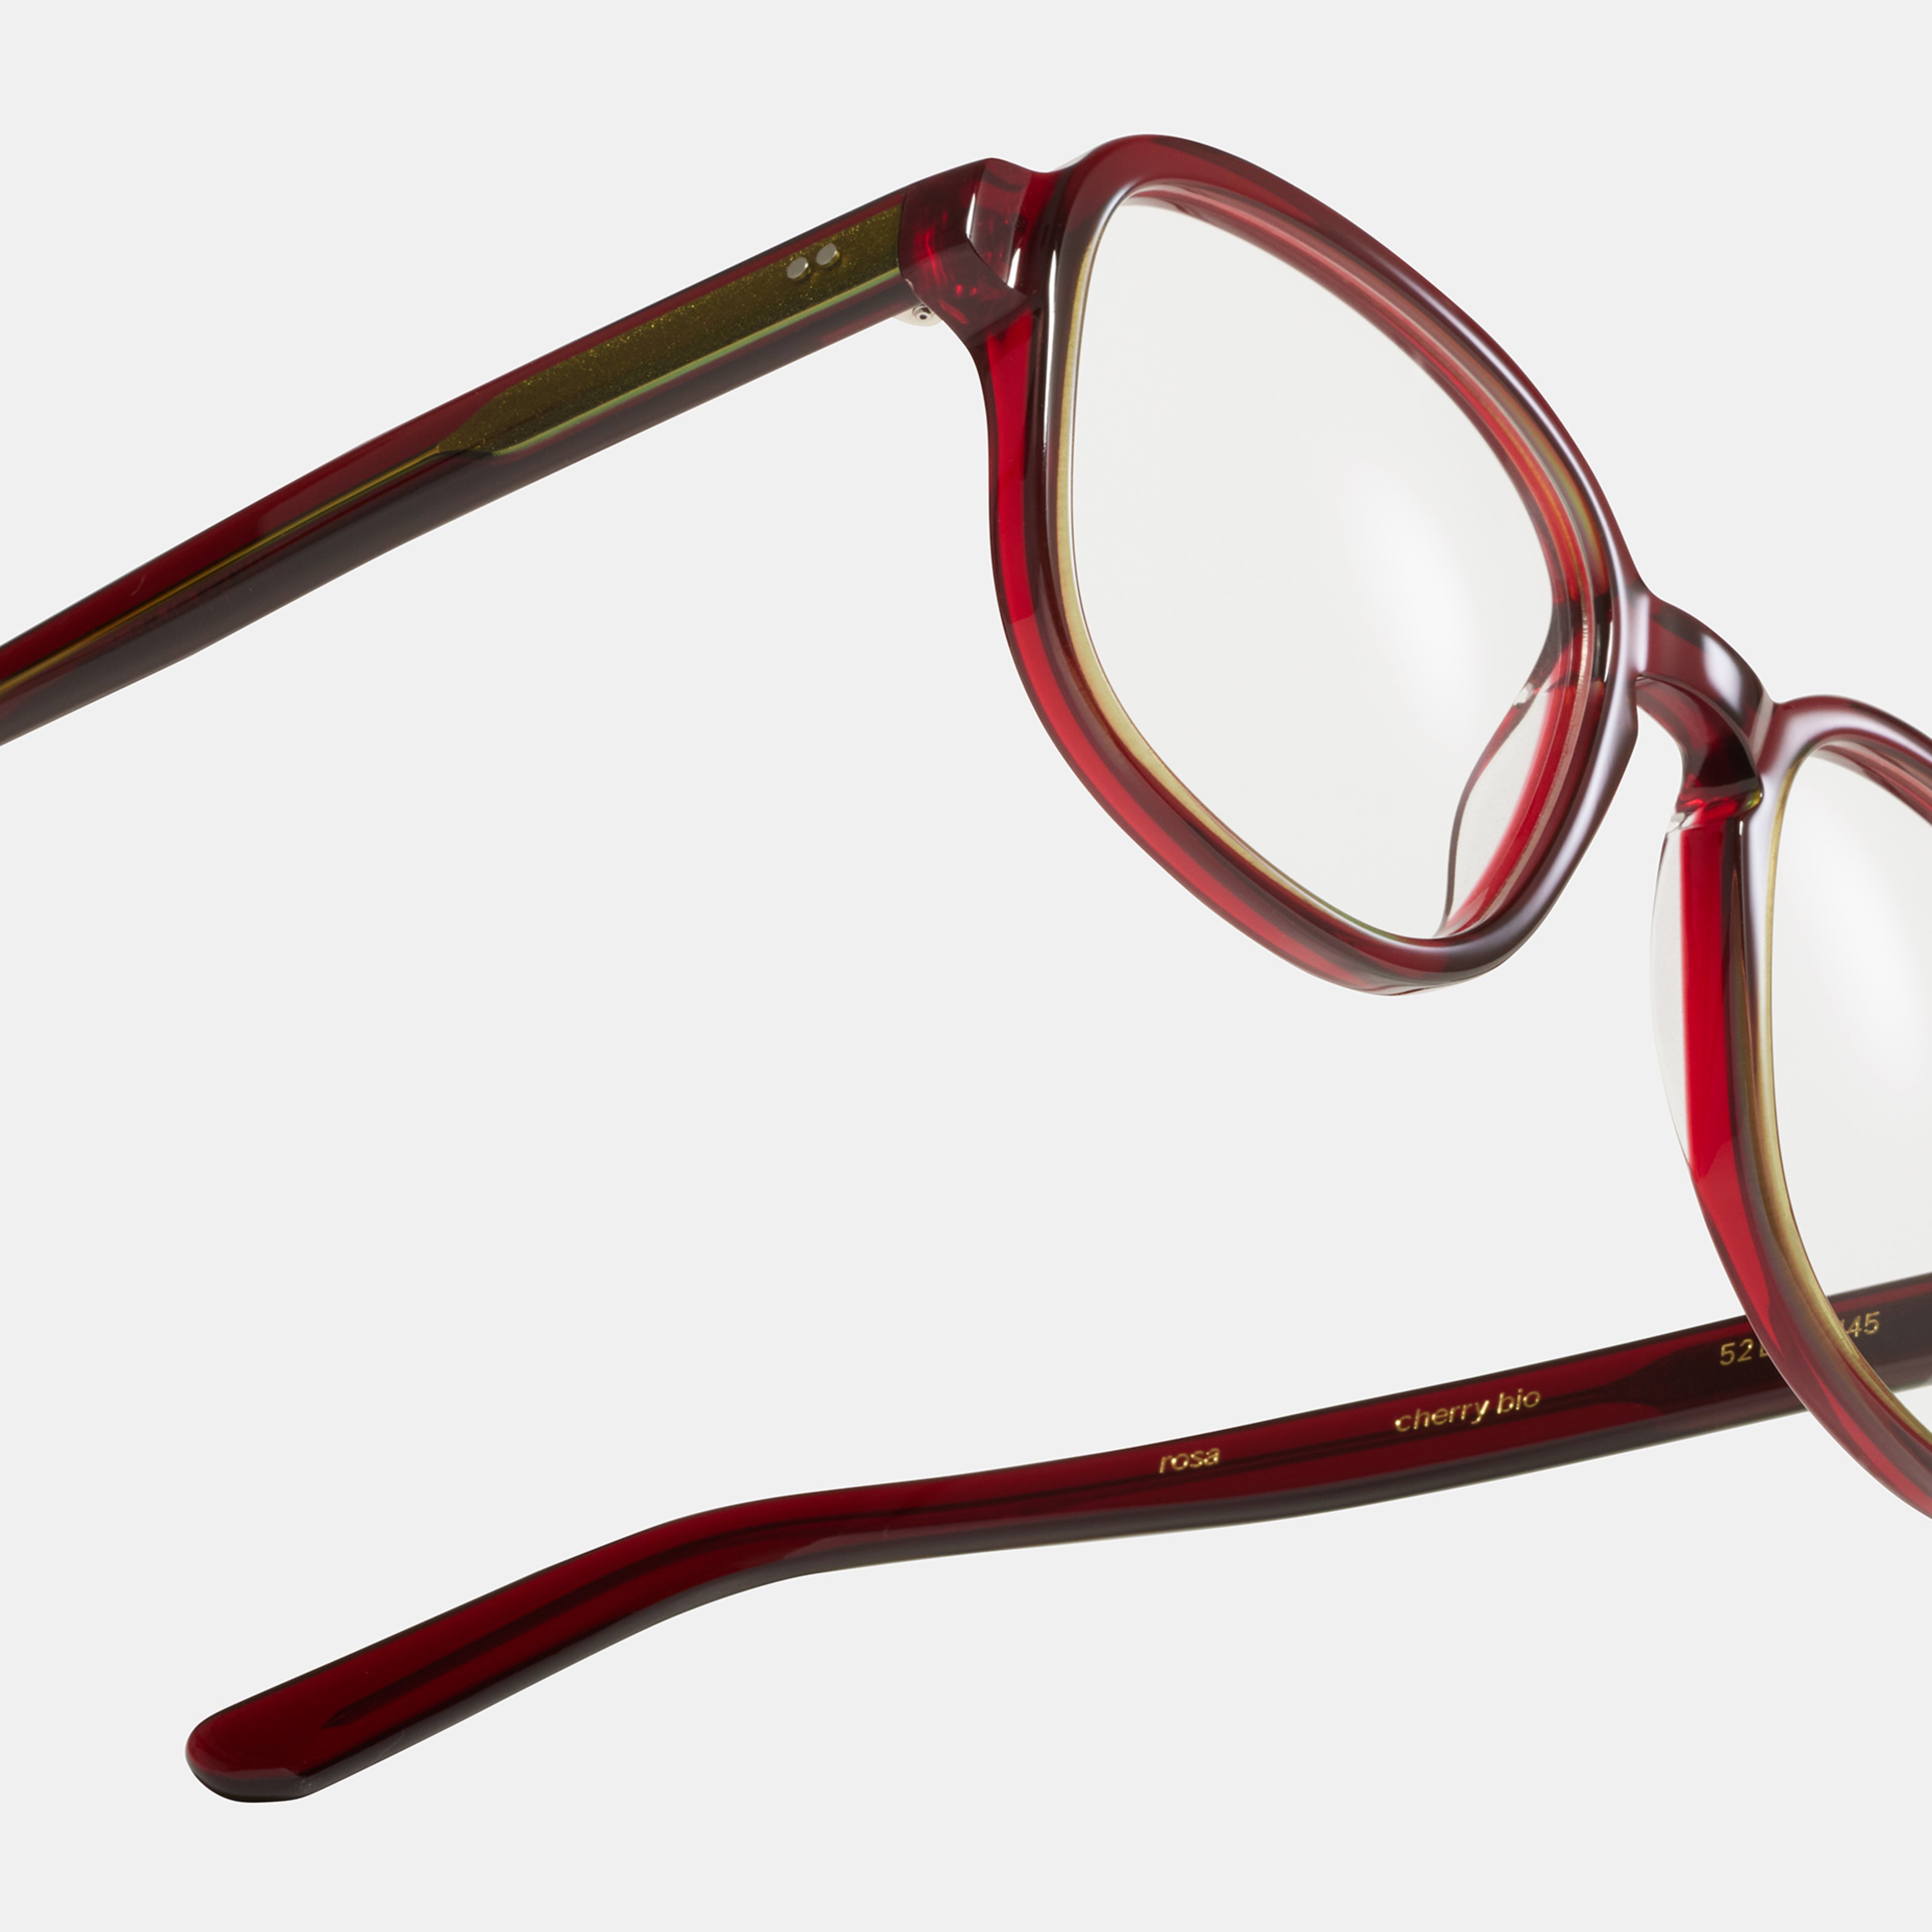 Ace & Tate Glasses | Square Bio acetate in Red